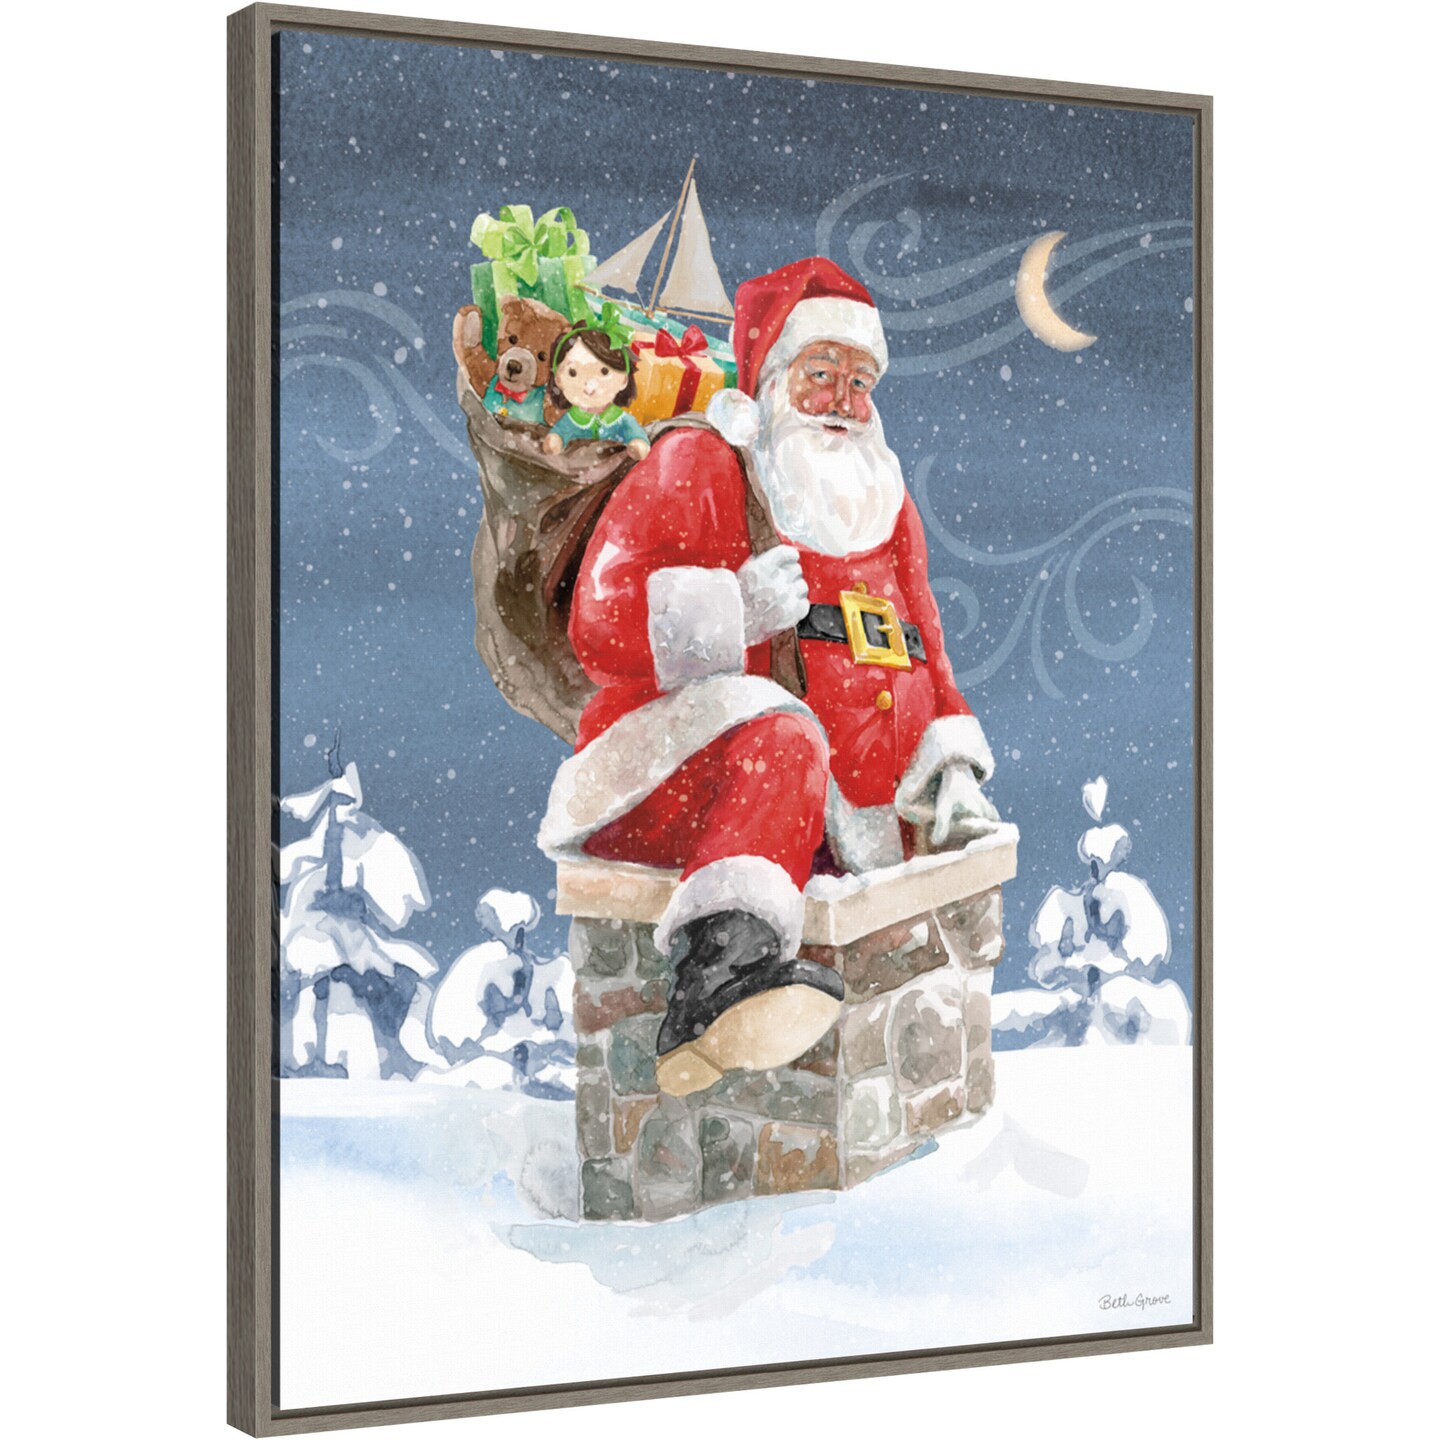 Santas List II by Beth Grove 23-in. W x 28-in. H. Canvas Wall Art Print Framed in Grey